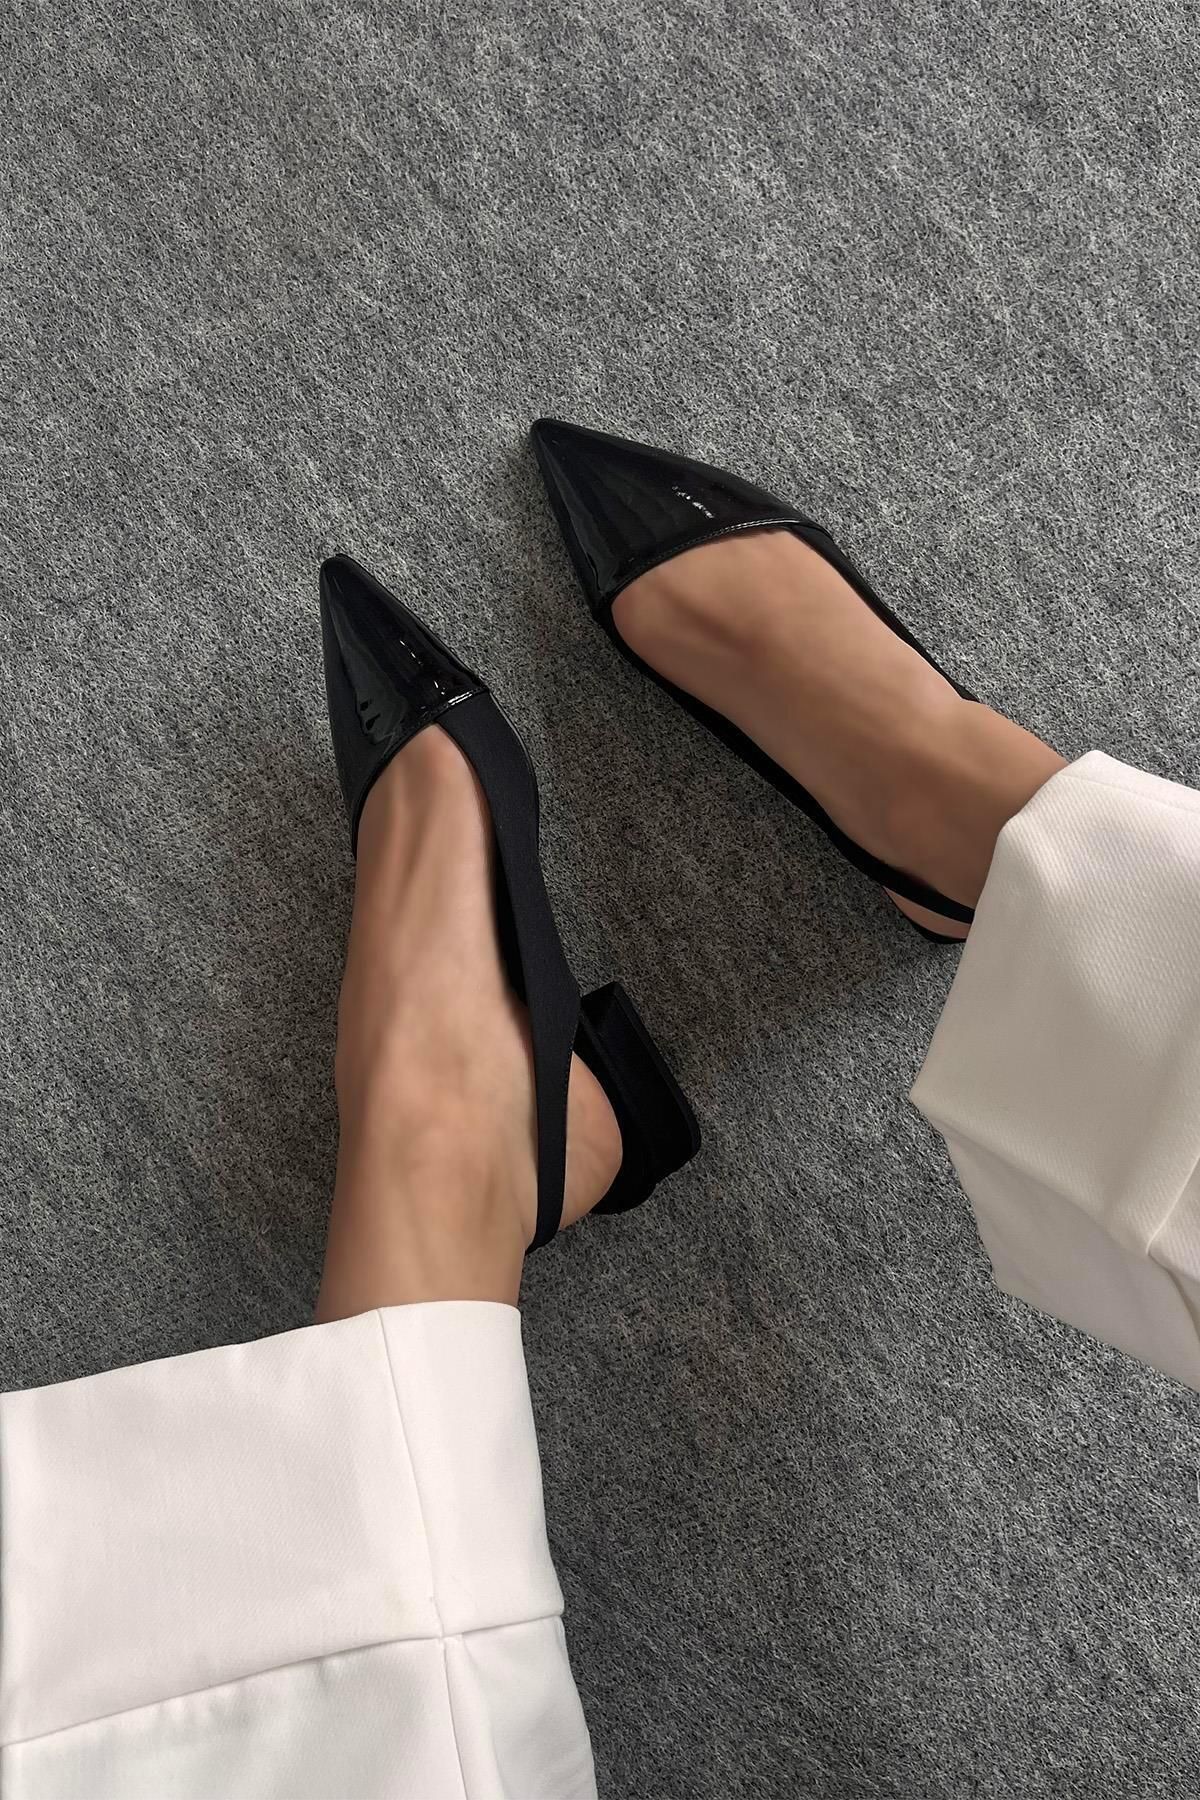 Straswans Ronan Kadın  Topuklu  Rugan  Ayakkabı Siyah